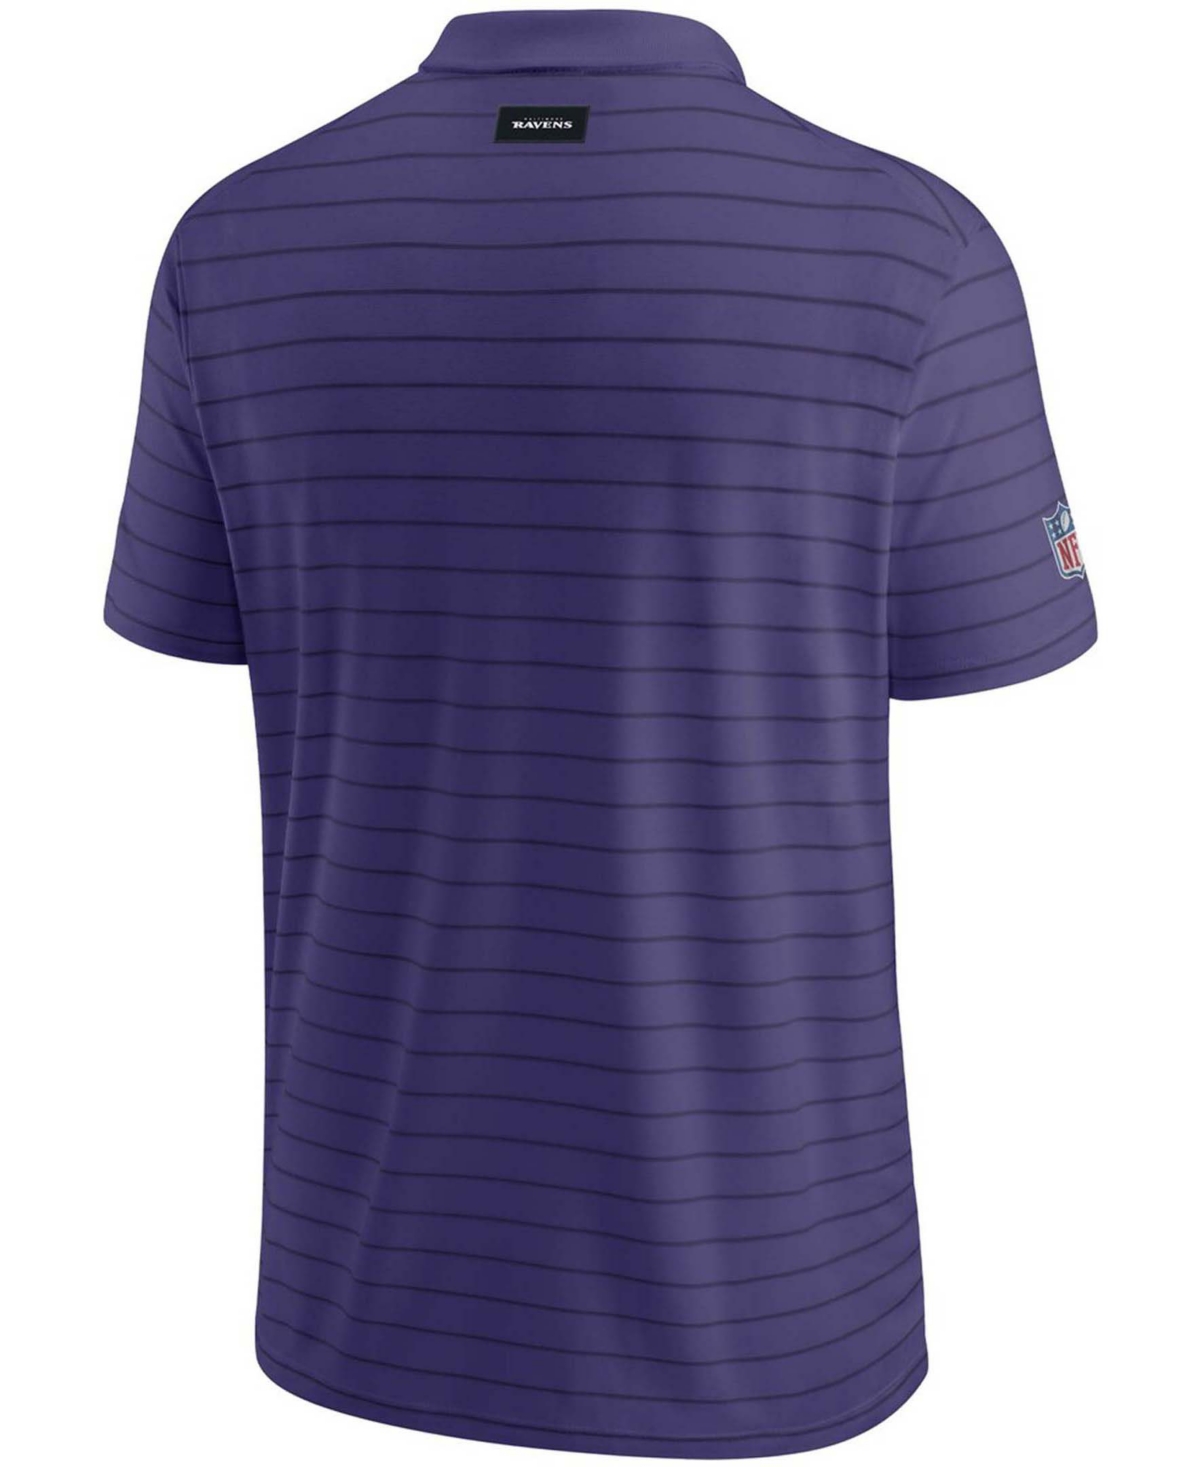 Shop Nike Men's Purple Baltimore Ravens Sideline Victory Coaches Performance Polo Shirt